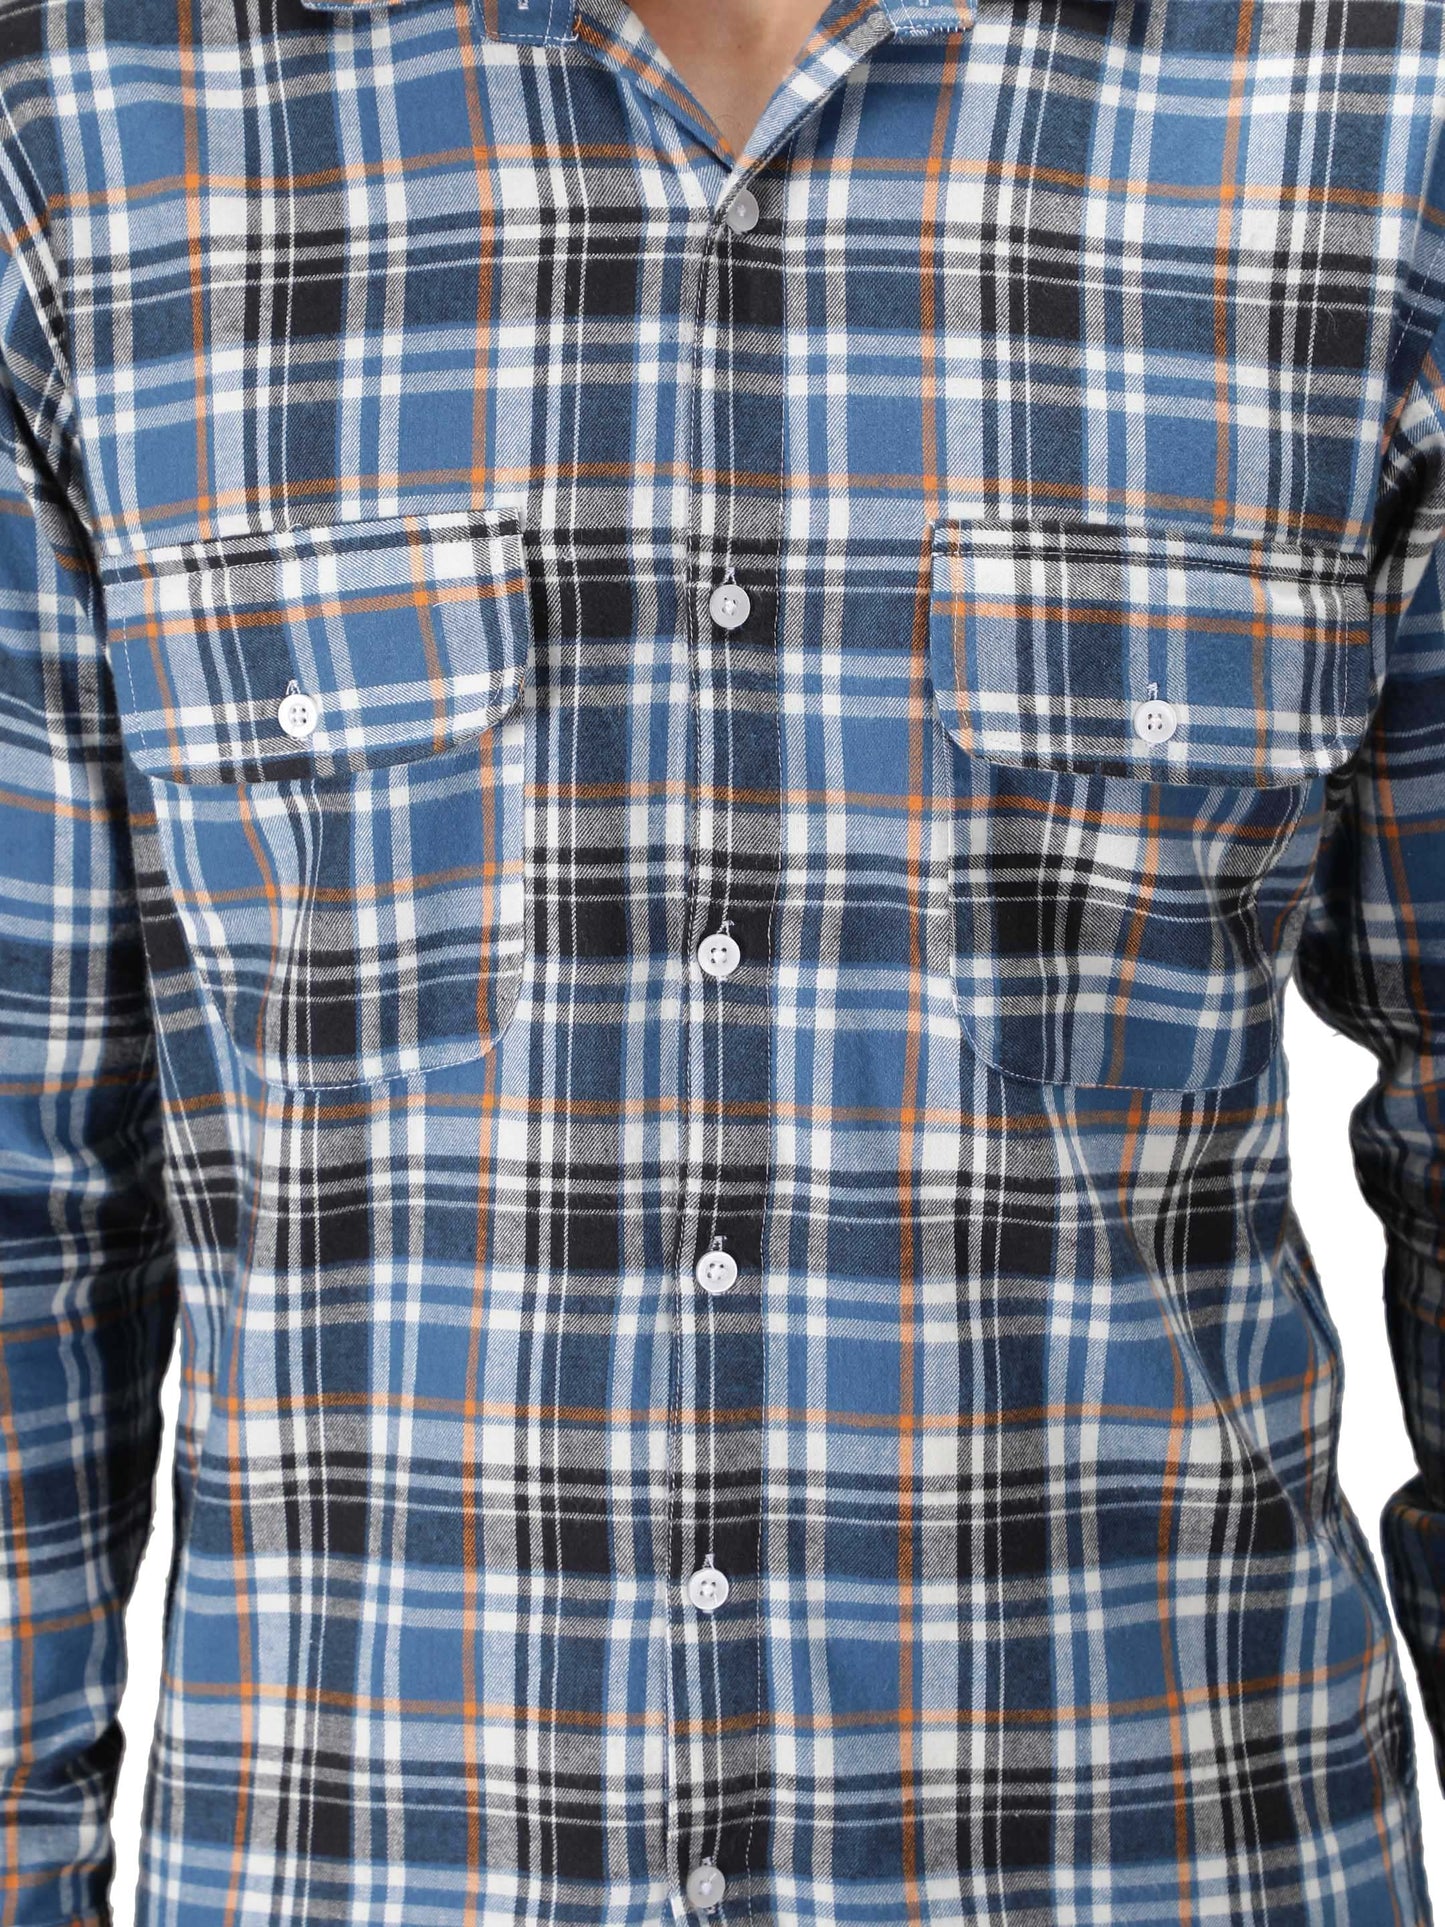 NUEVOSPORTA Pure Cotton Check Pattern Men's Full Sleeve Shirt_Blue/Black